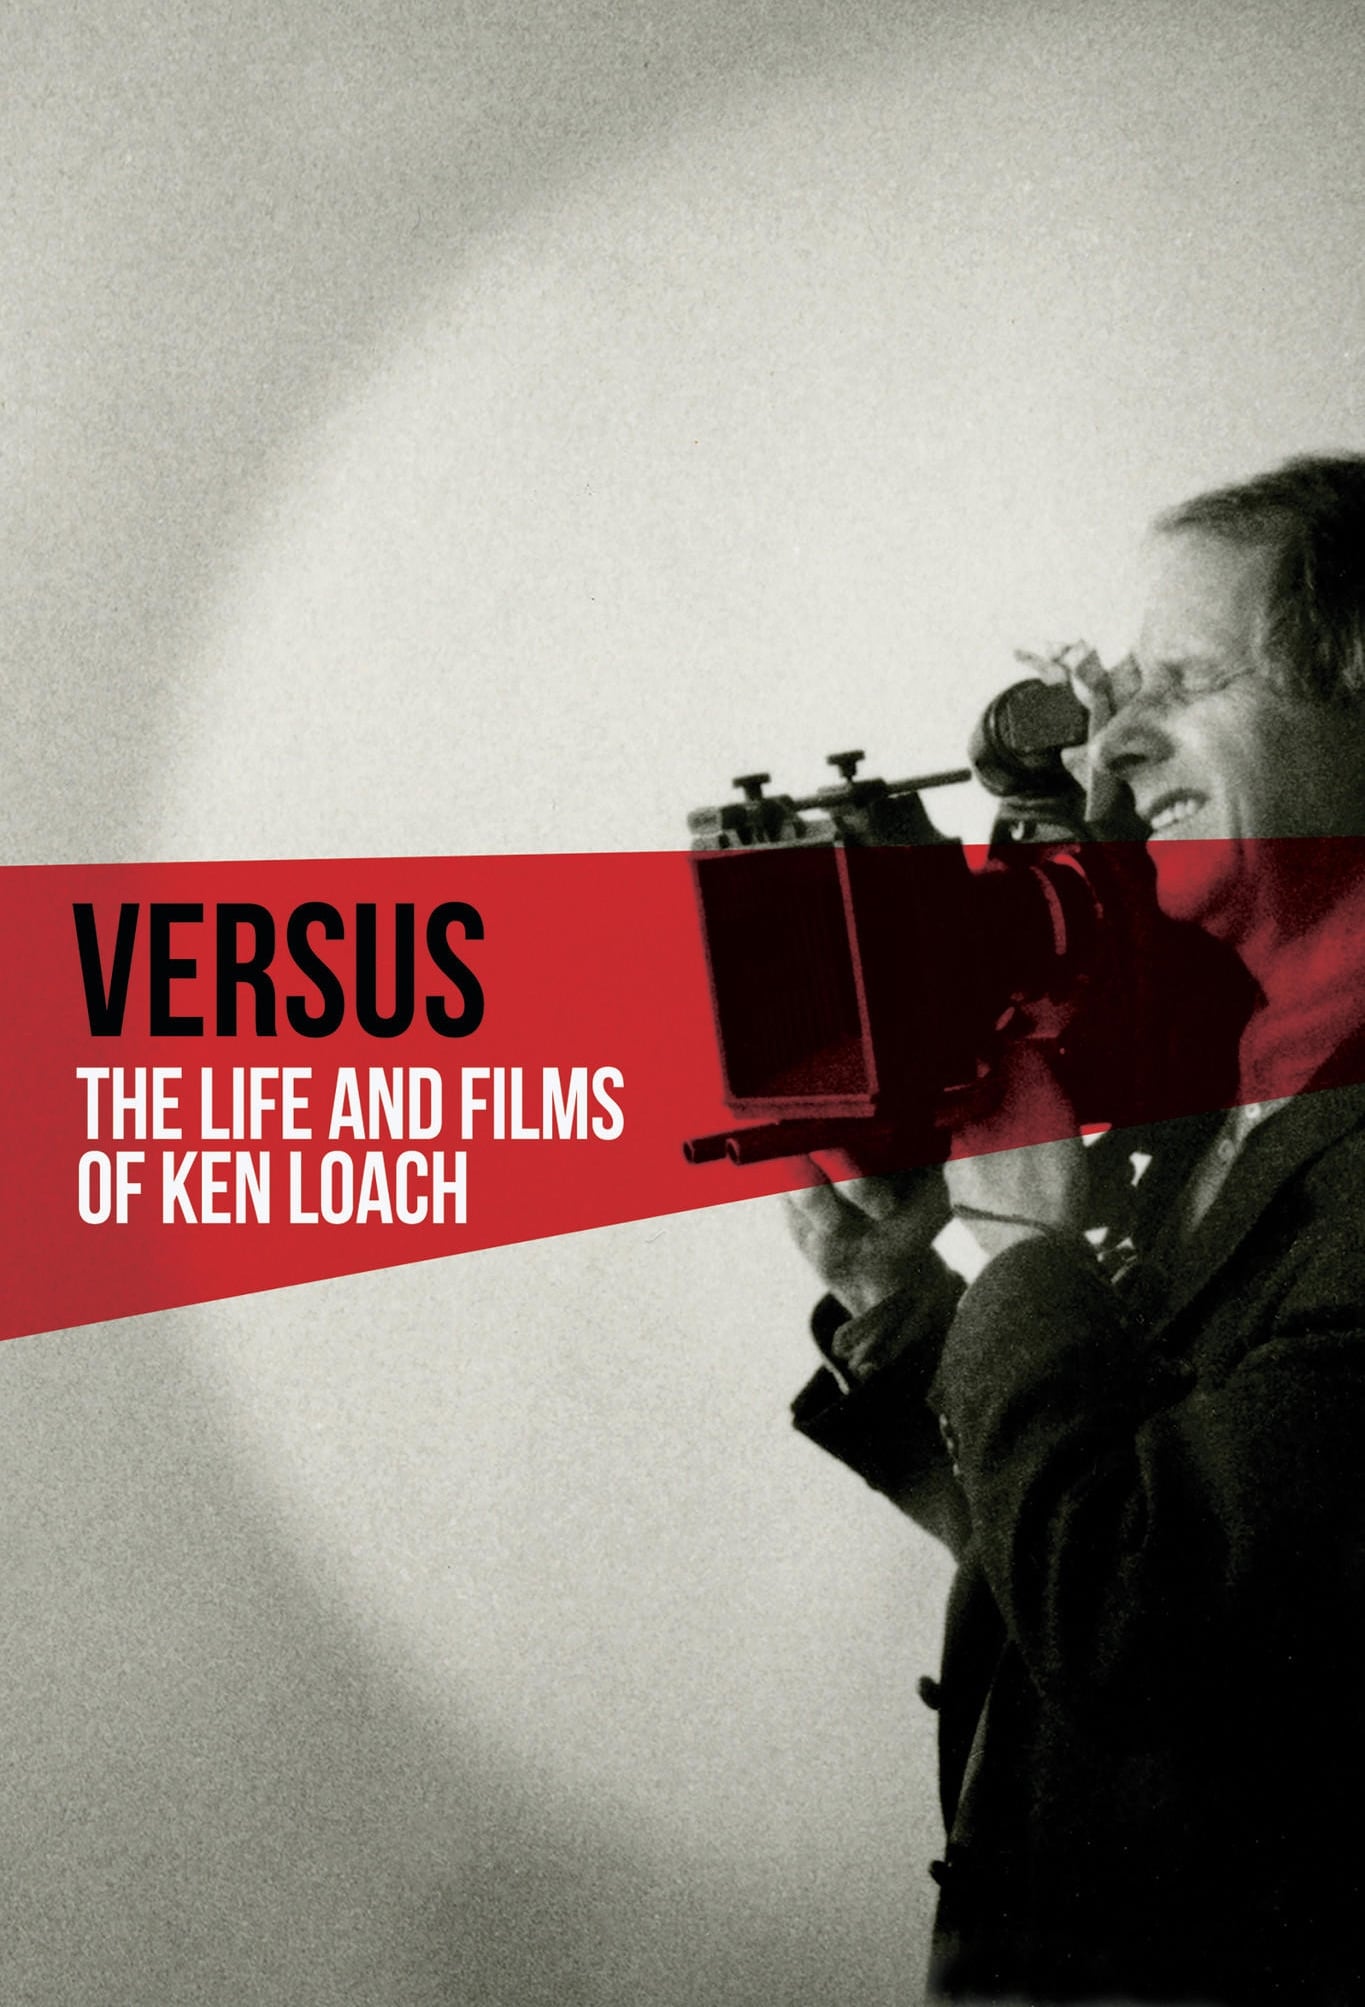 Caratula de VERSUS - THE LIFE AND FILMS OF KEN LOACH (Versus: Ken Loach / Versus: Ken Loach, su vida y el cine) 